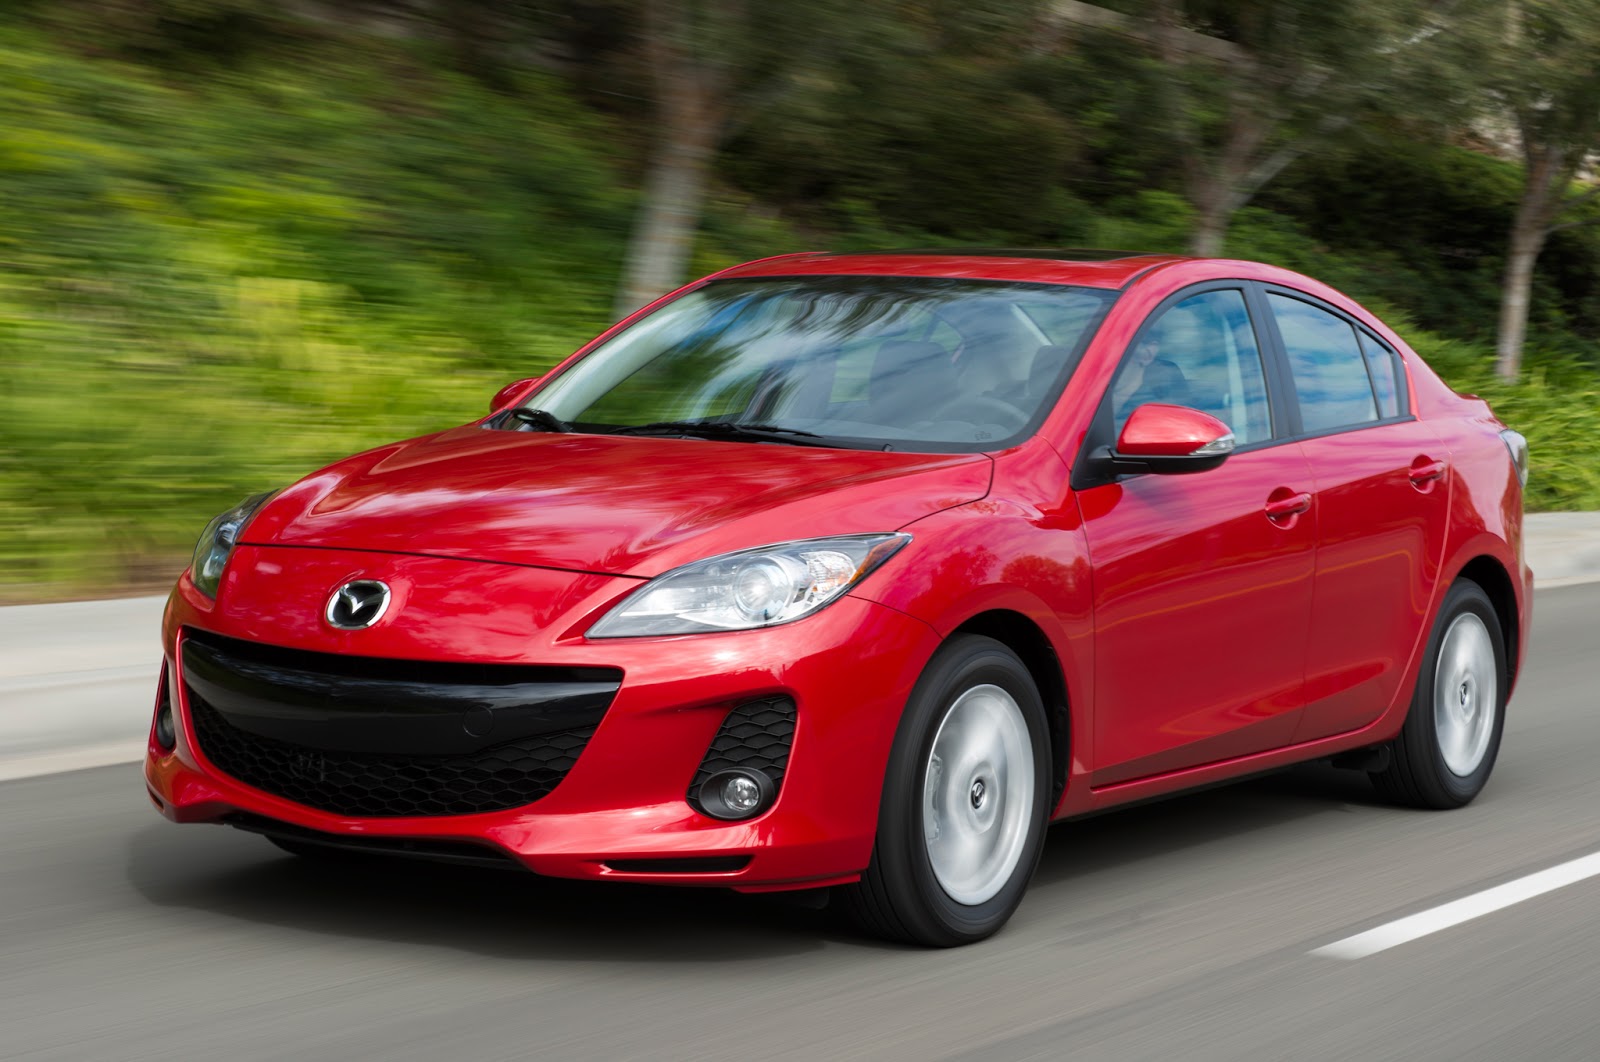 New Car Models: 2013 Mazda 3